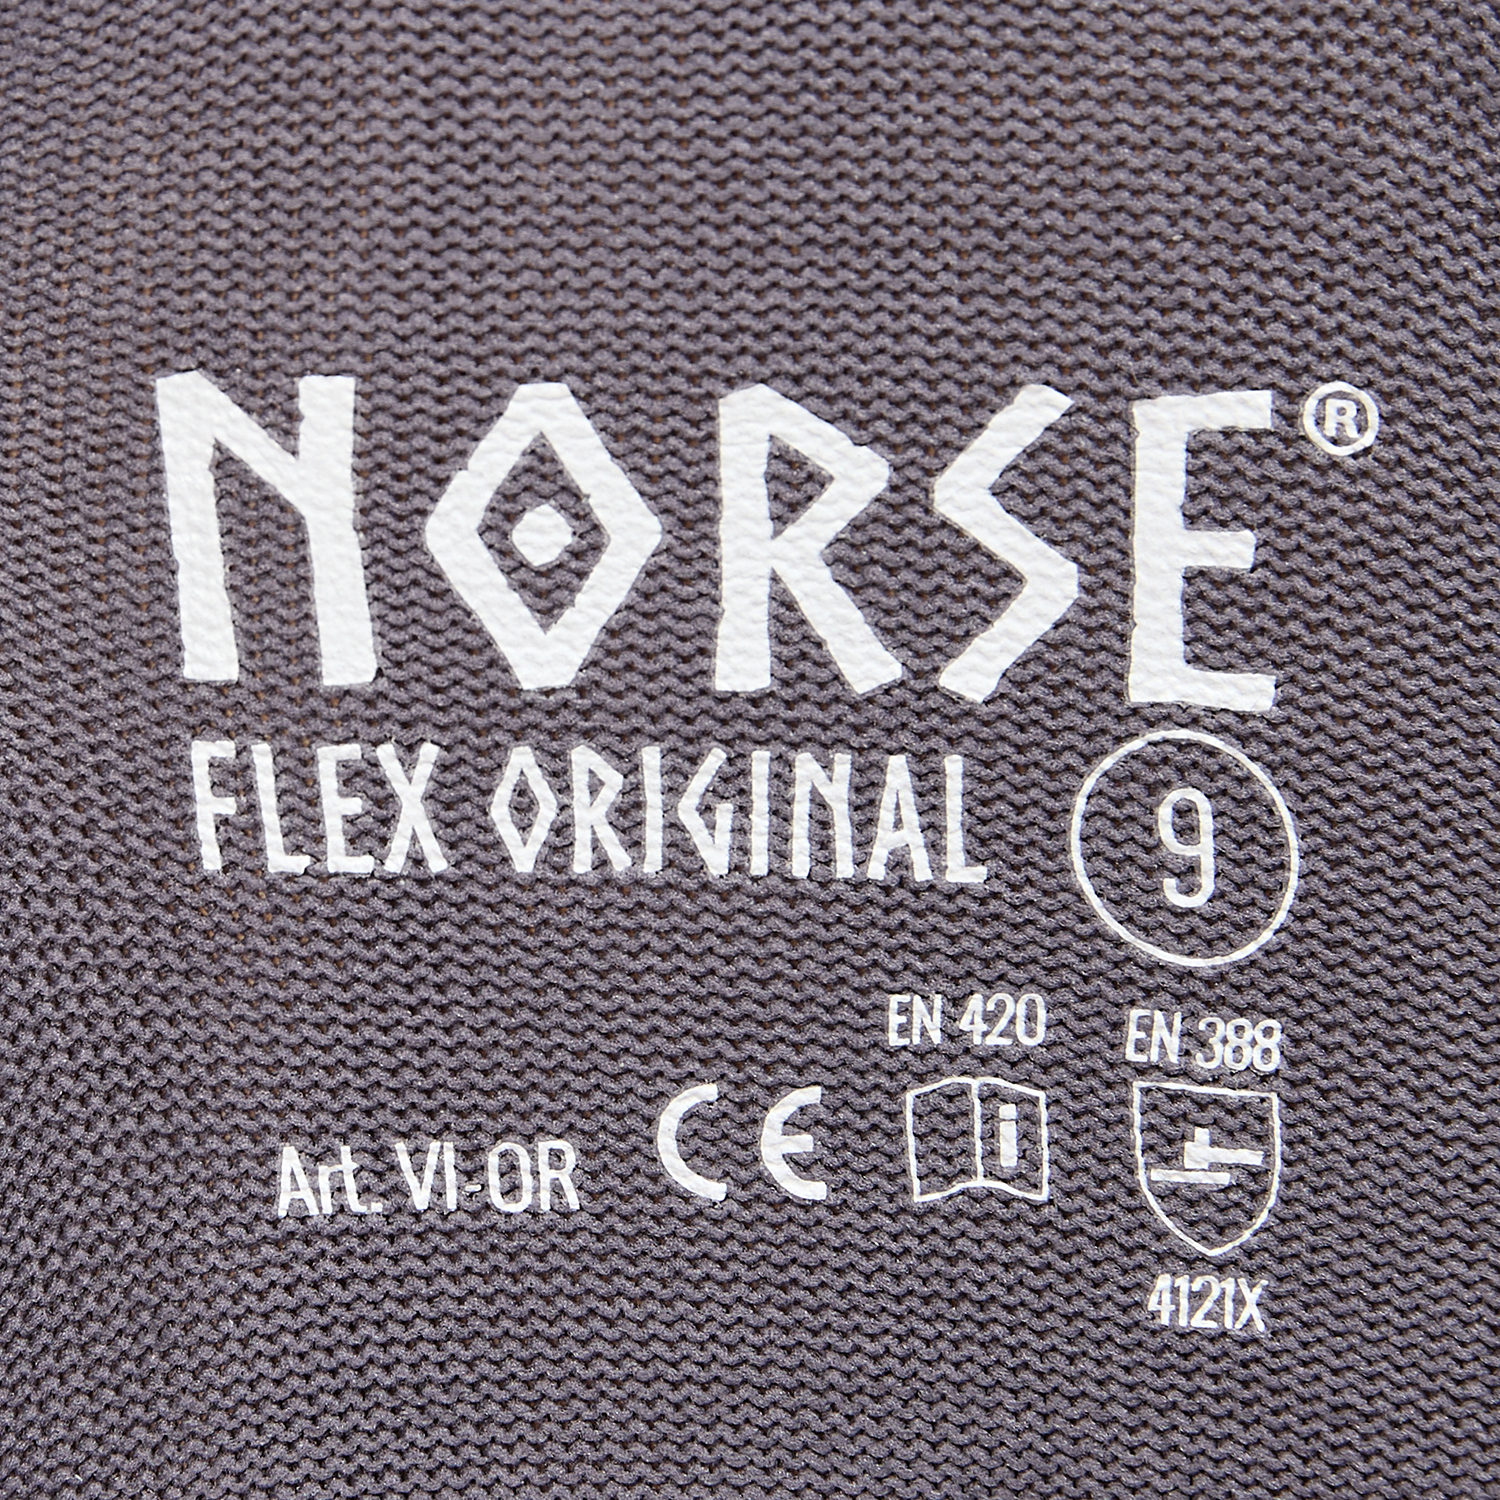 NORSE Flex Original kokoonpanohanskat koko 8